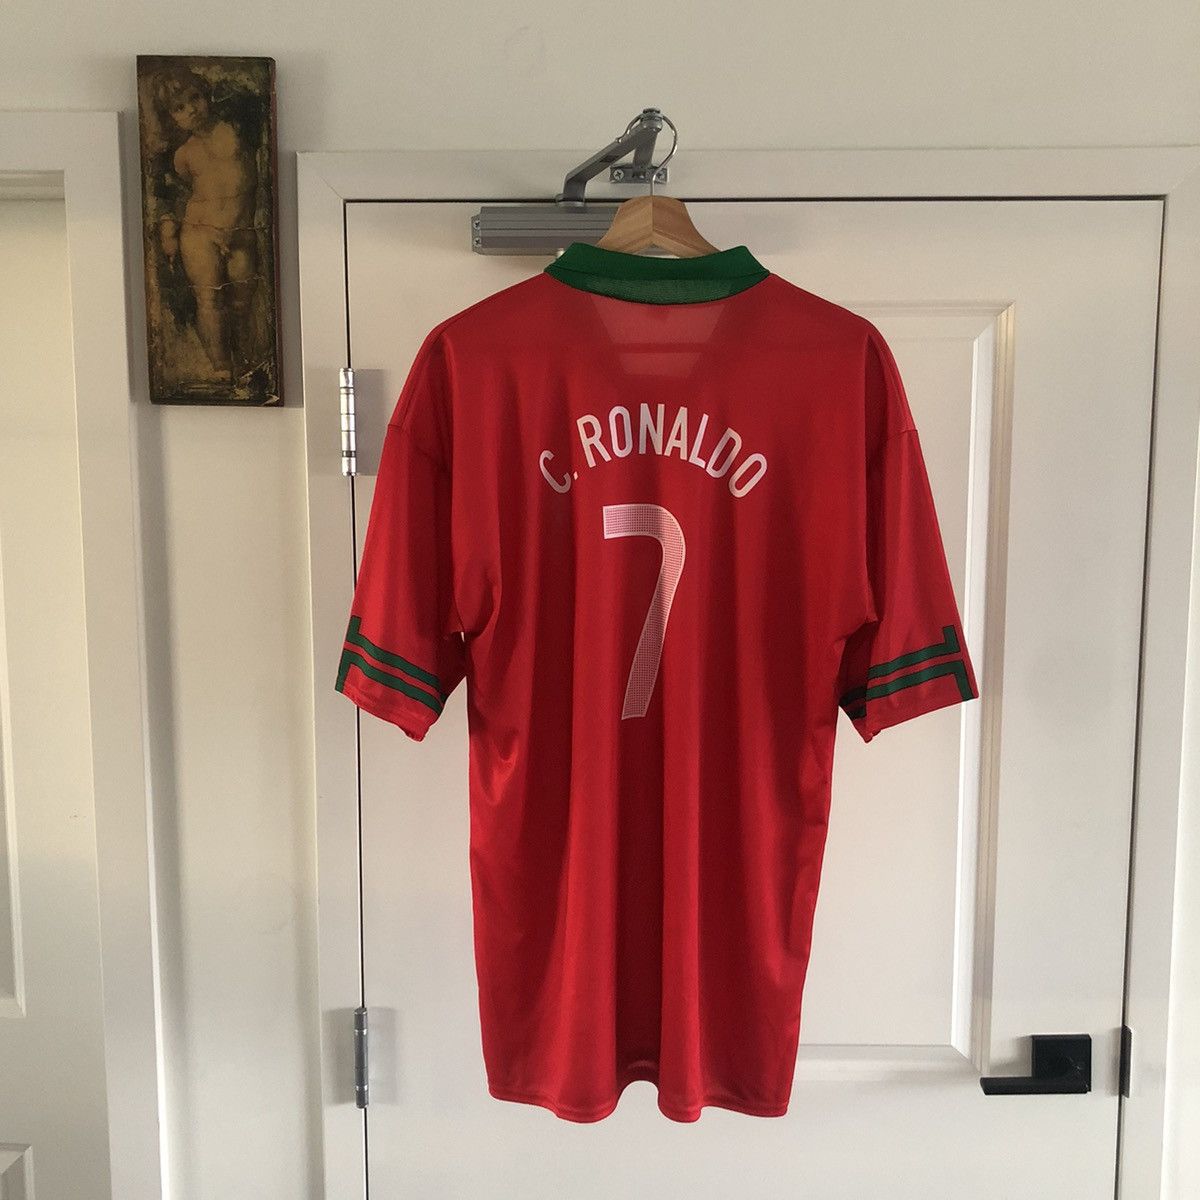 Vintage kalciomania Portugal Cristiano Ronaldo #17 shirt (Size M